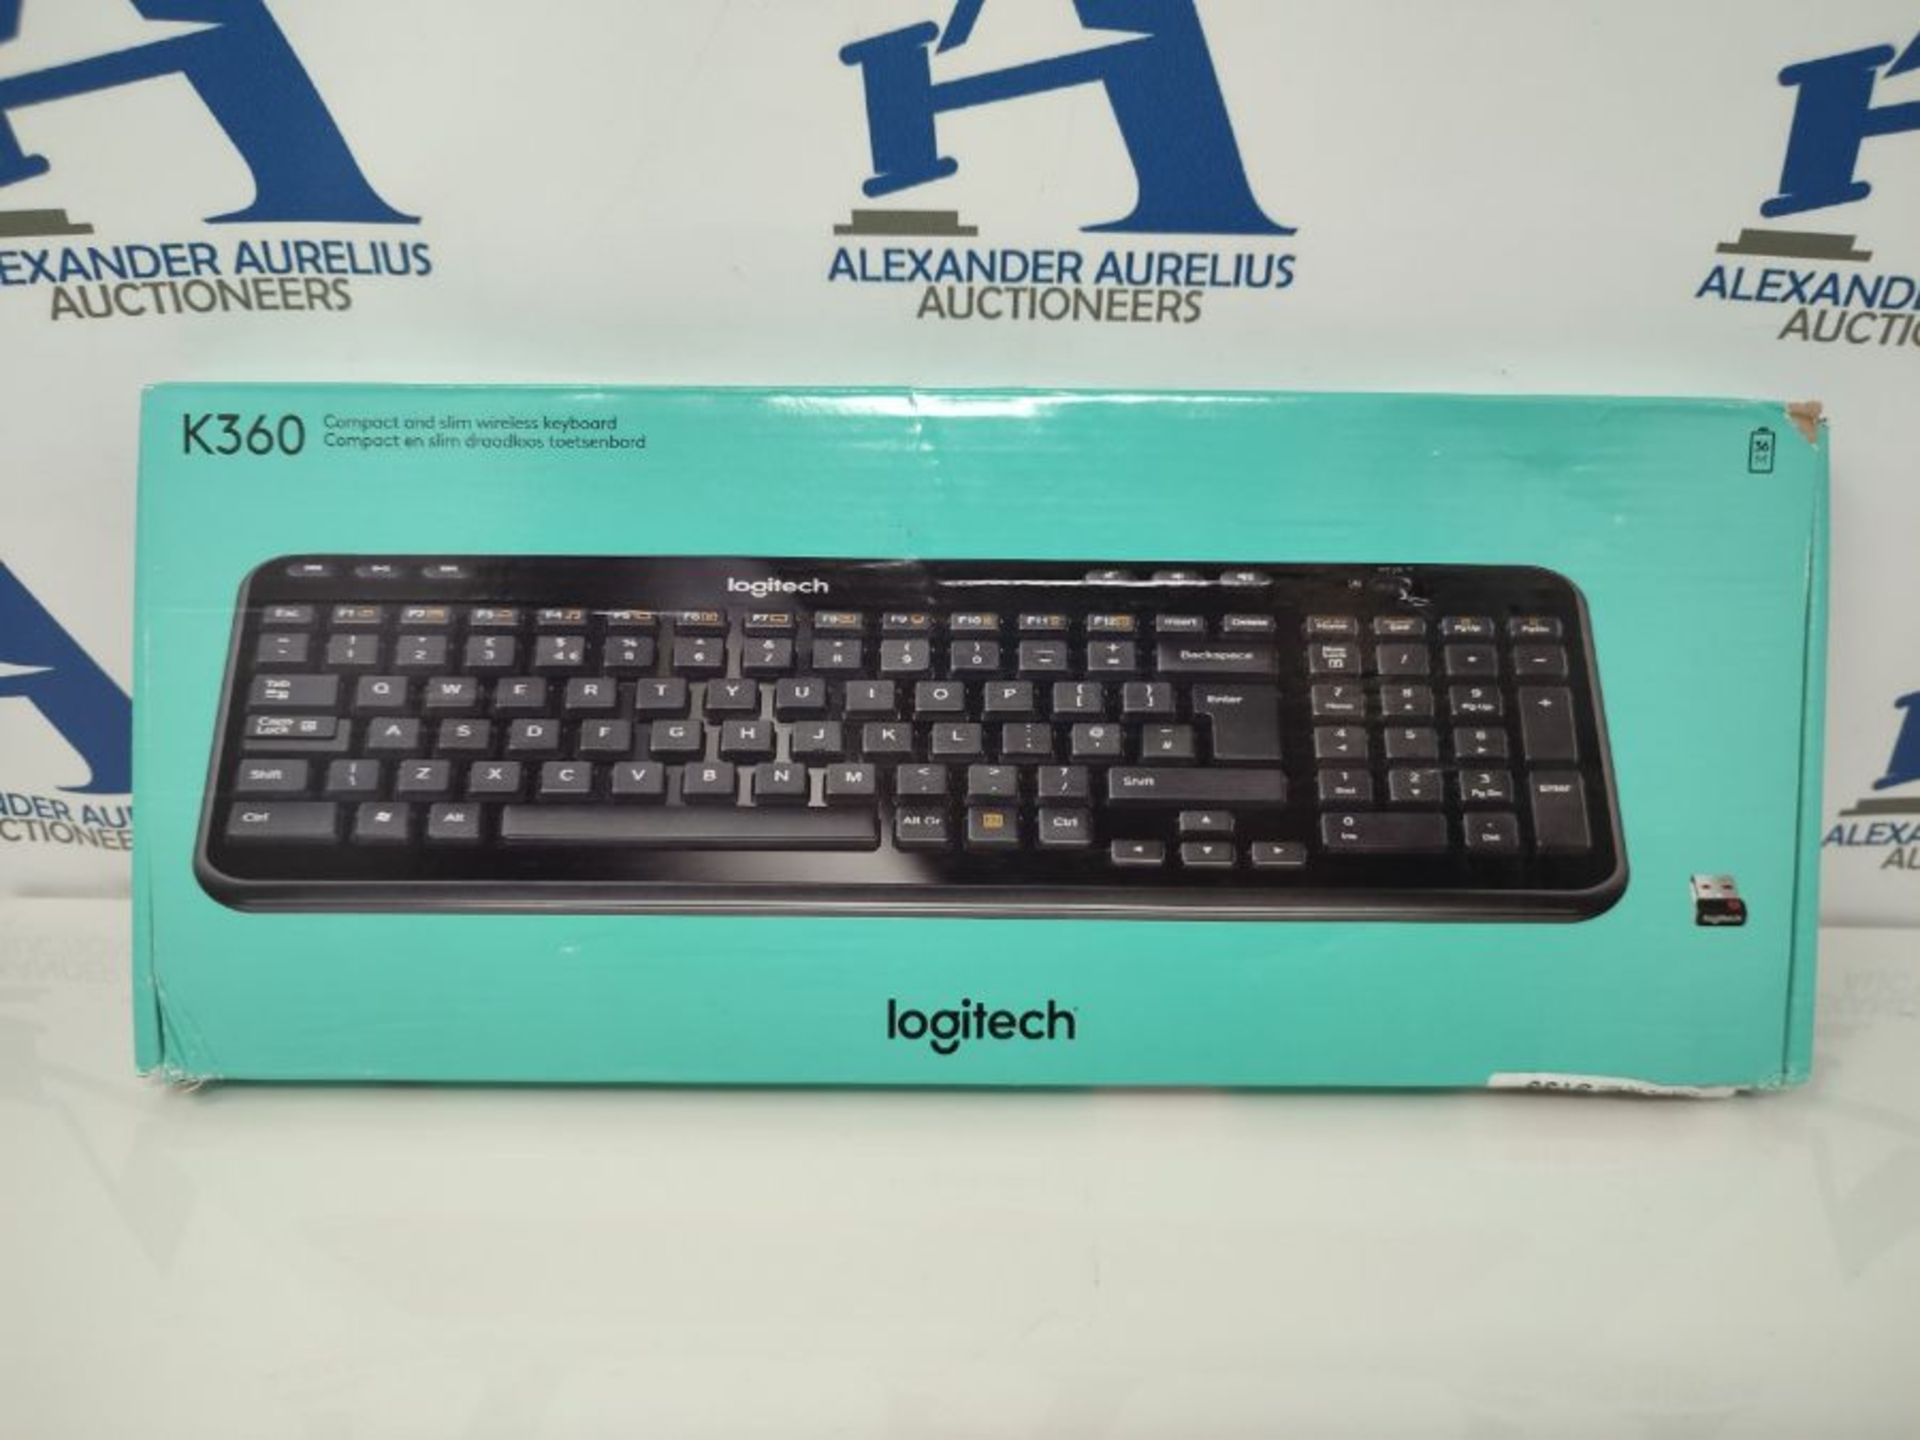 Logitech K360 Compact Wireless Keyboard for Windows, 2.4GHz Wireless, USB Unifying Rec - Image 2 of 3